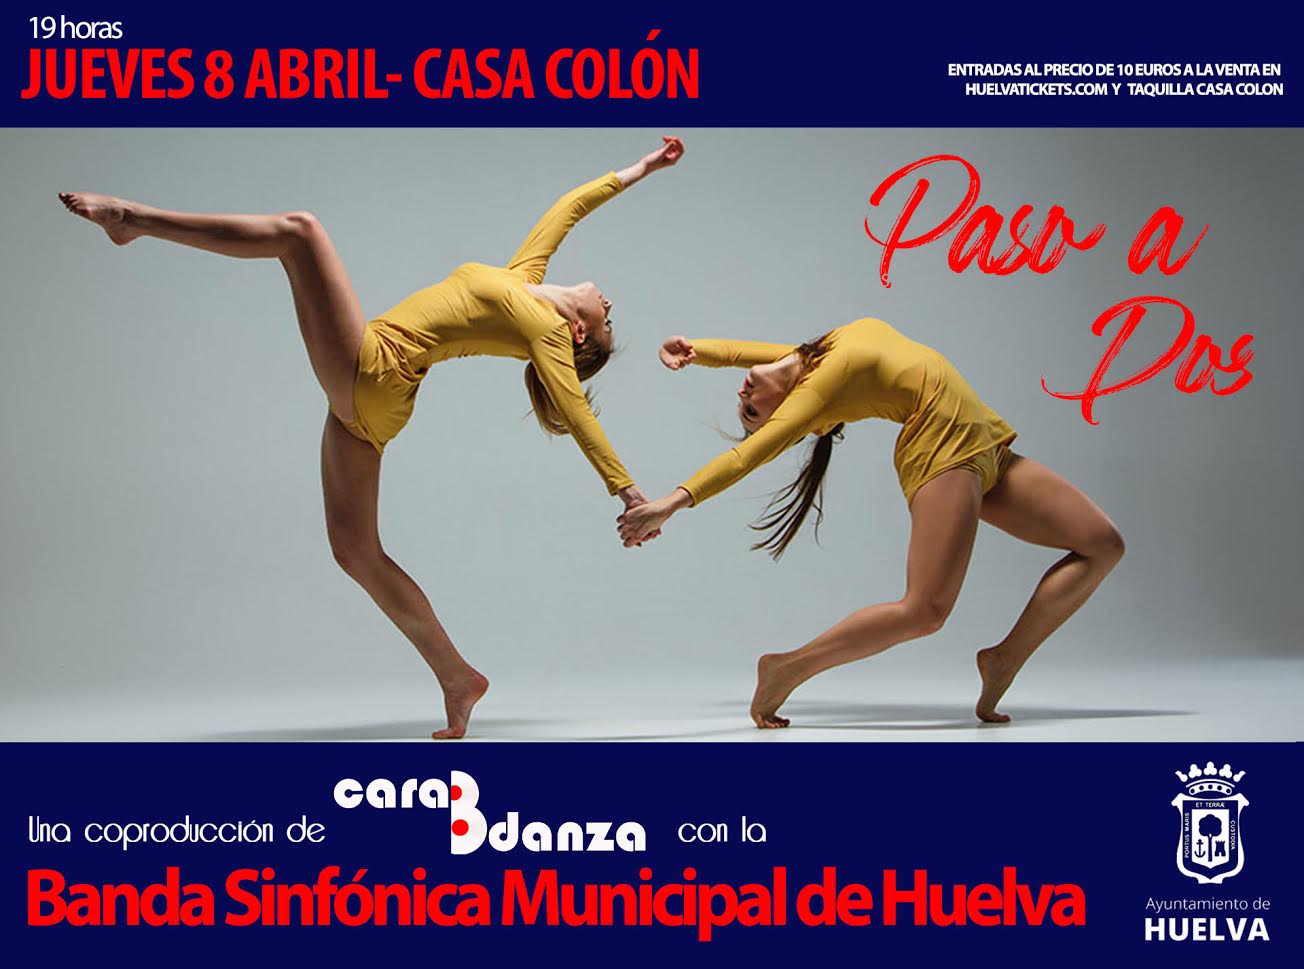 danza casa b con la banda sinfonica municipal abril 2021 Huelva